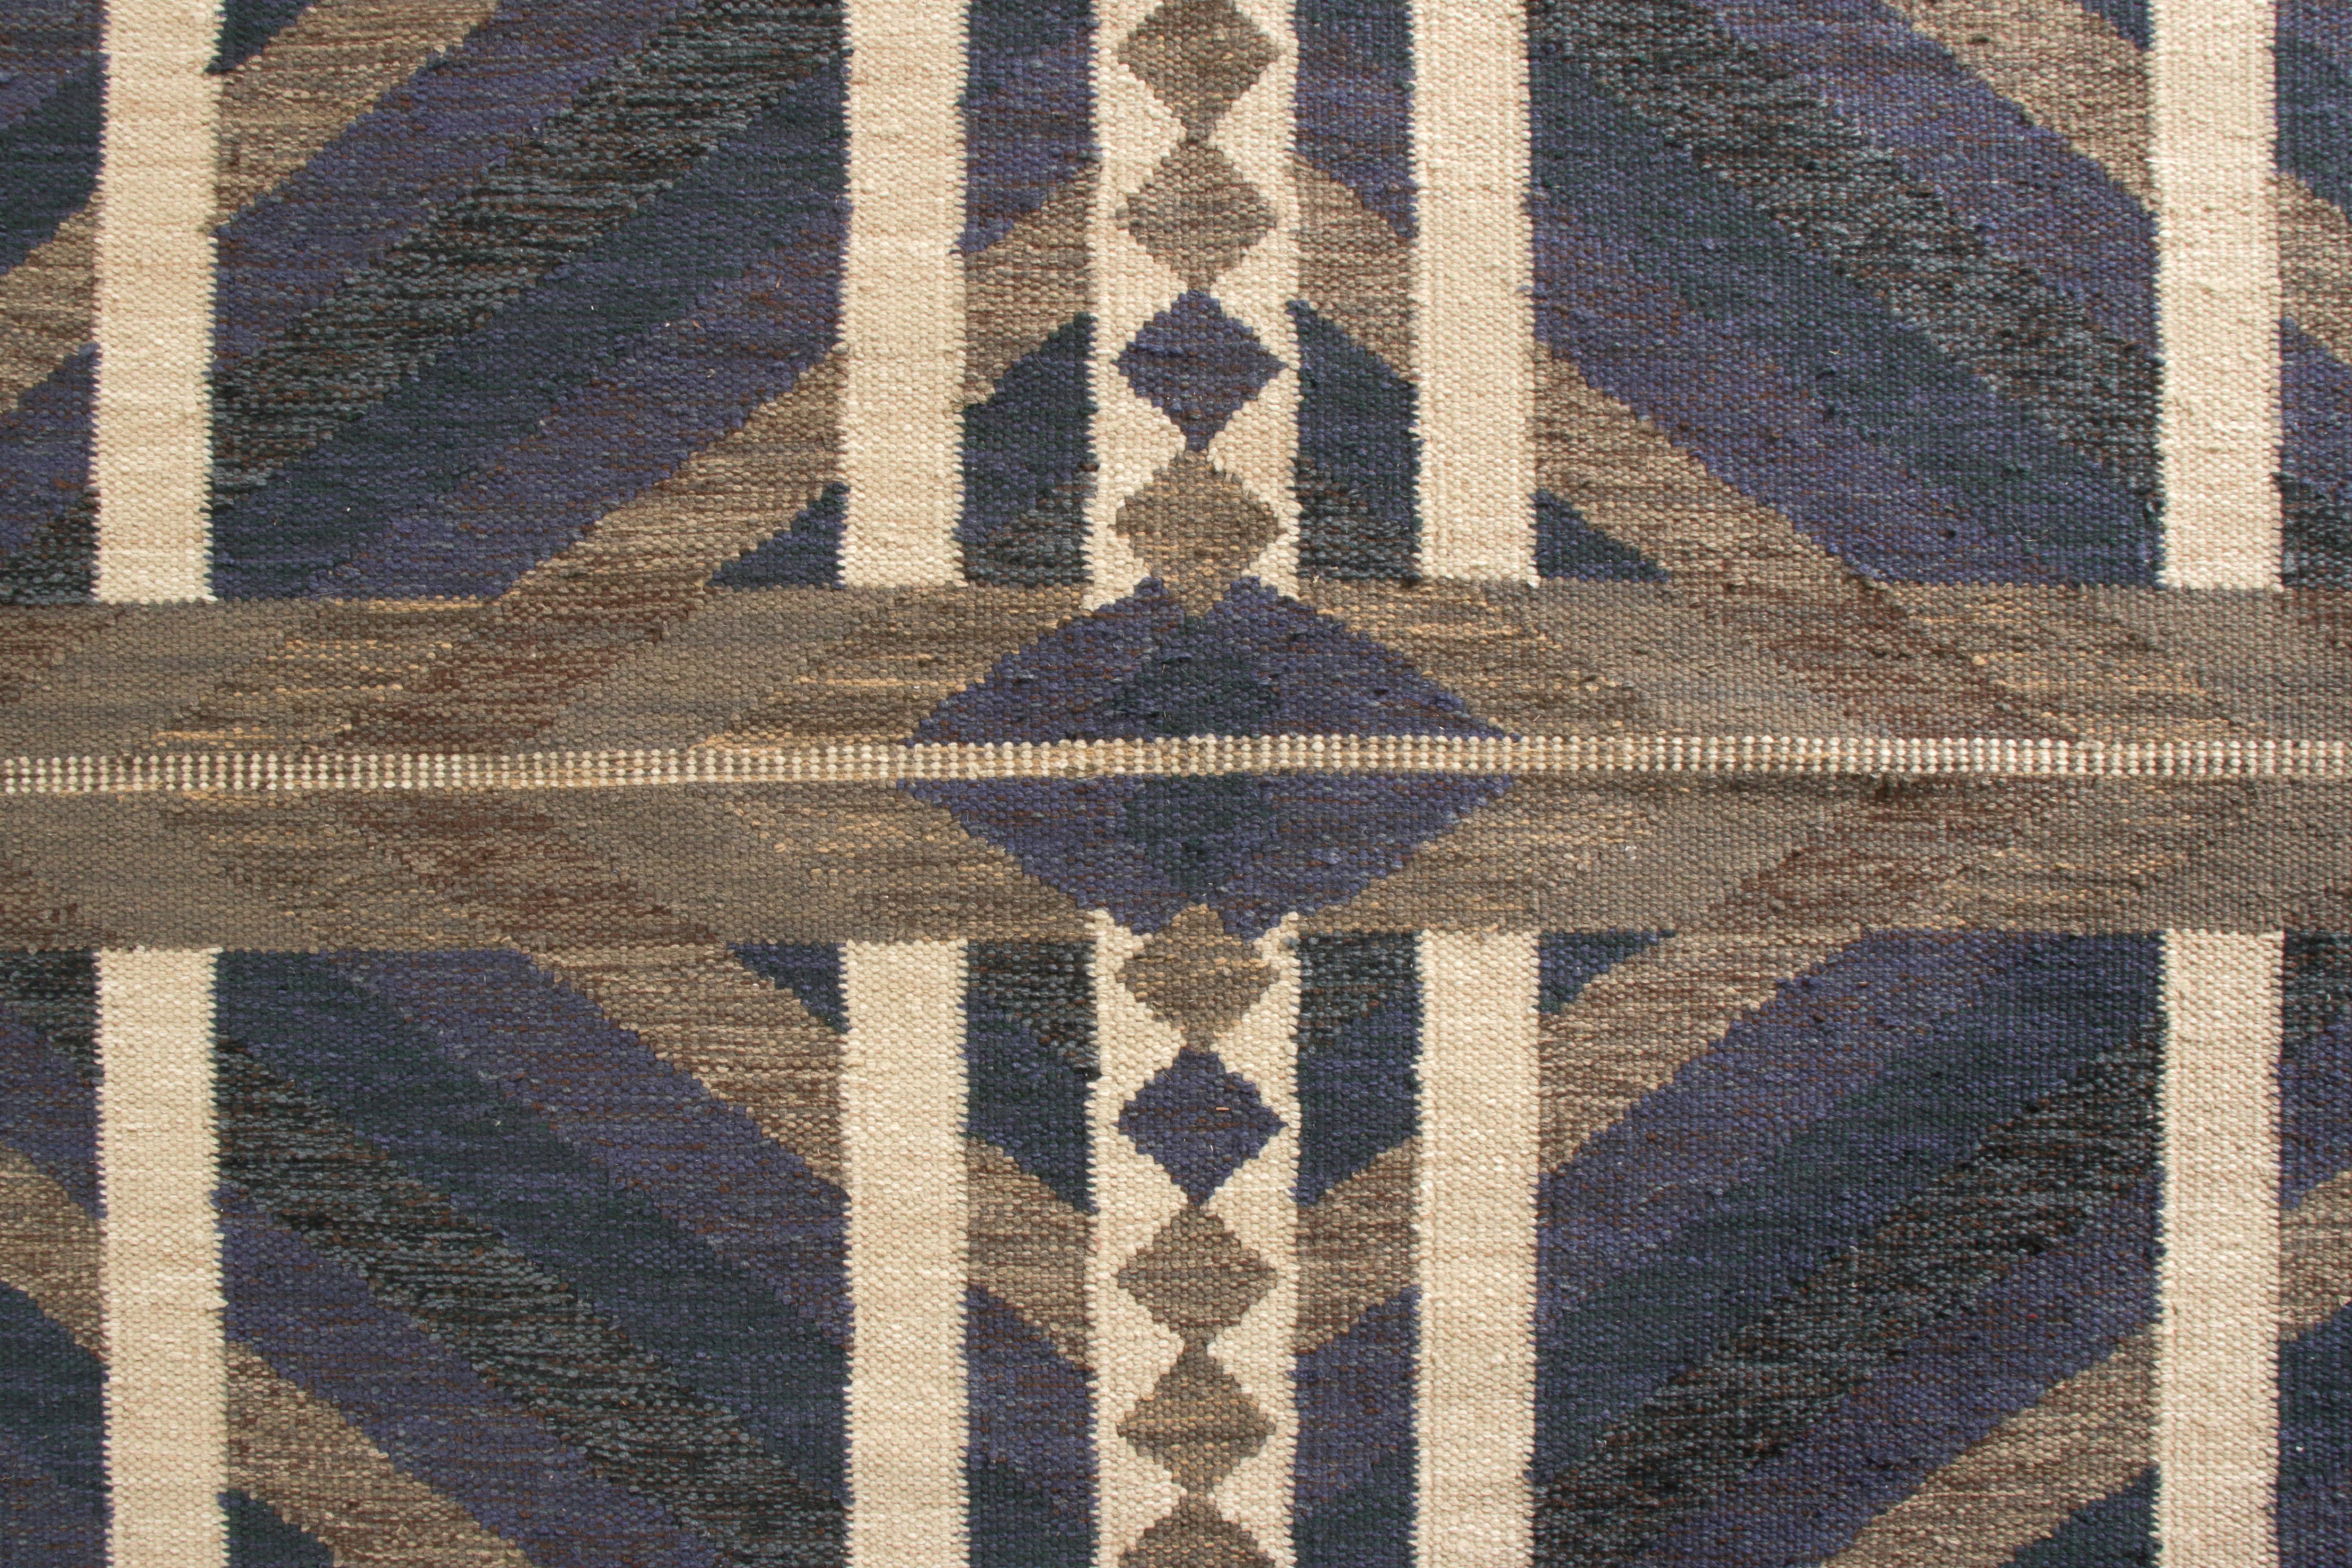 Indian Rug & Kilim’s Scandinavian Style Kilim Rug in Blue Beige-Brown Geometric pattern For Sale